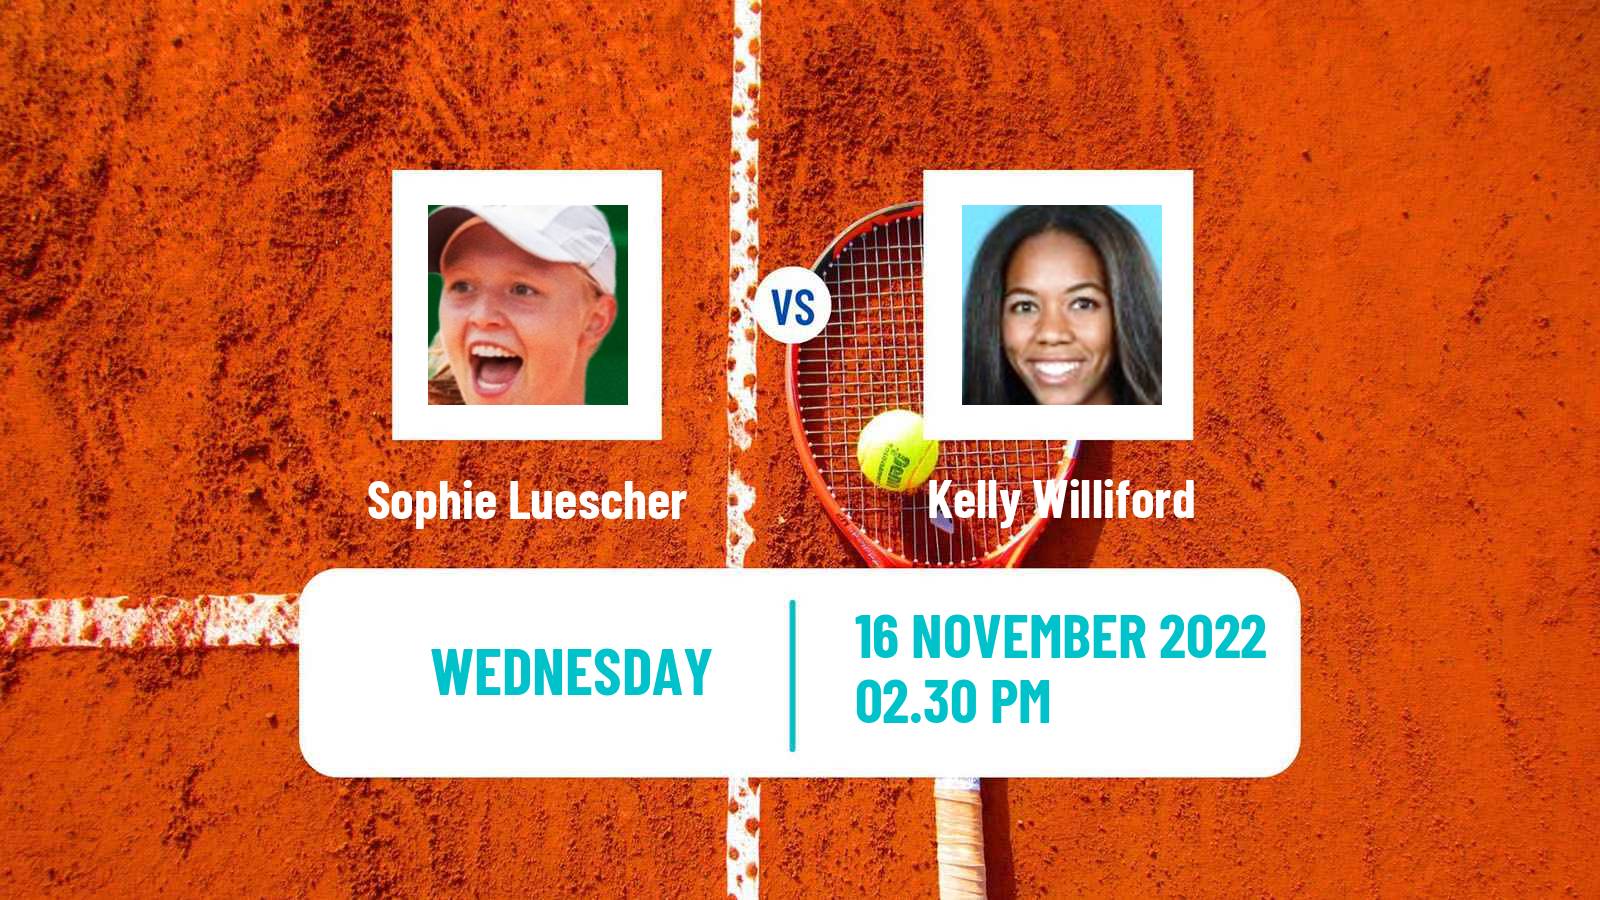 Tennis ITF Tournaments Sophie Luescher - Kelly Williford